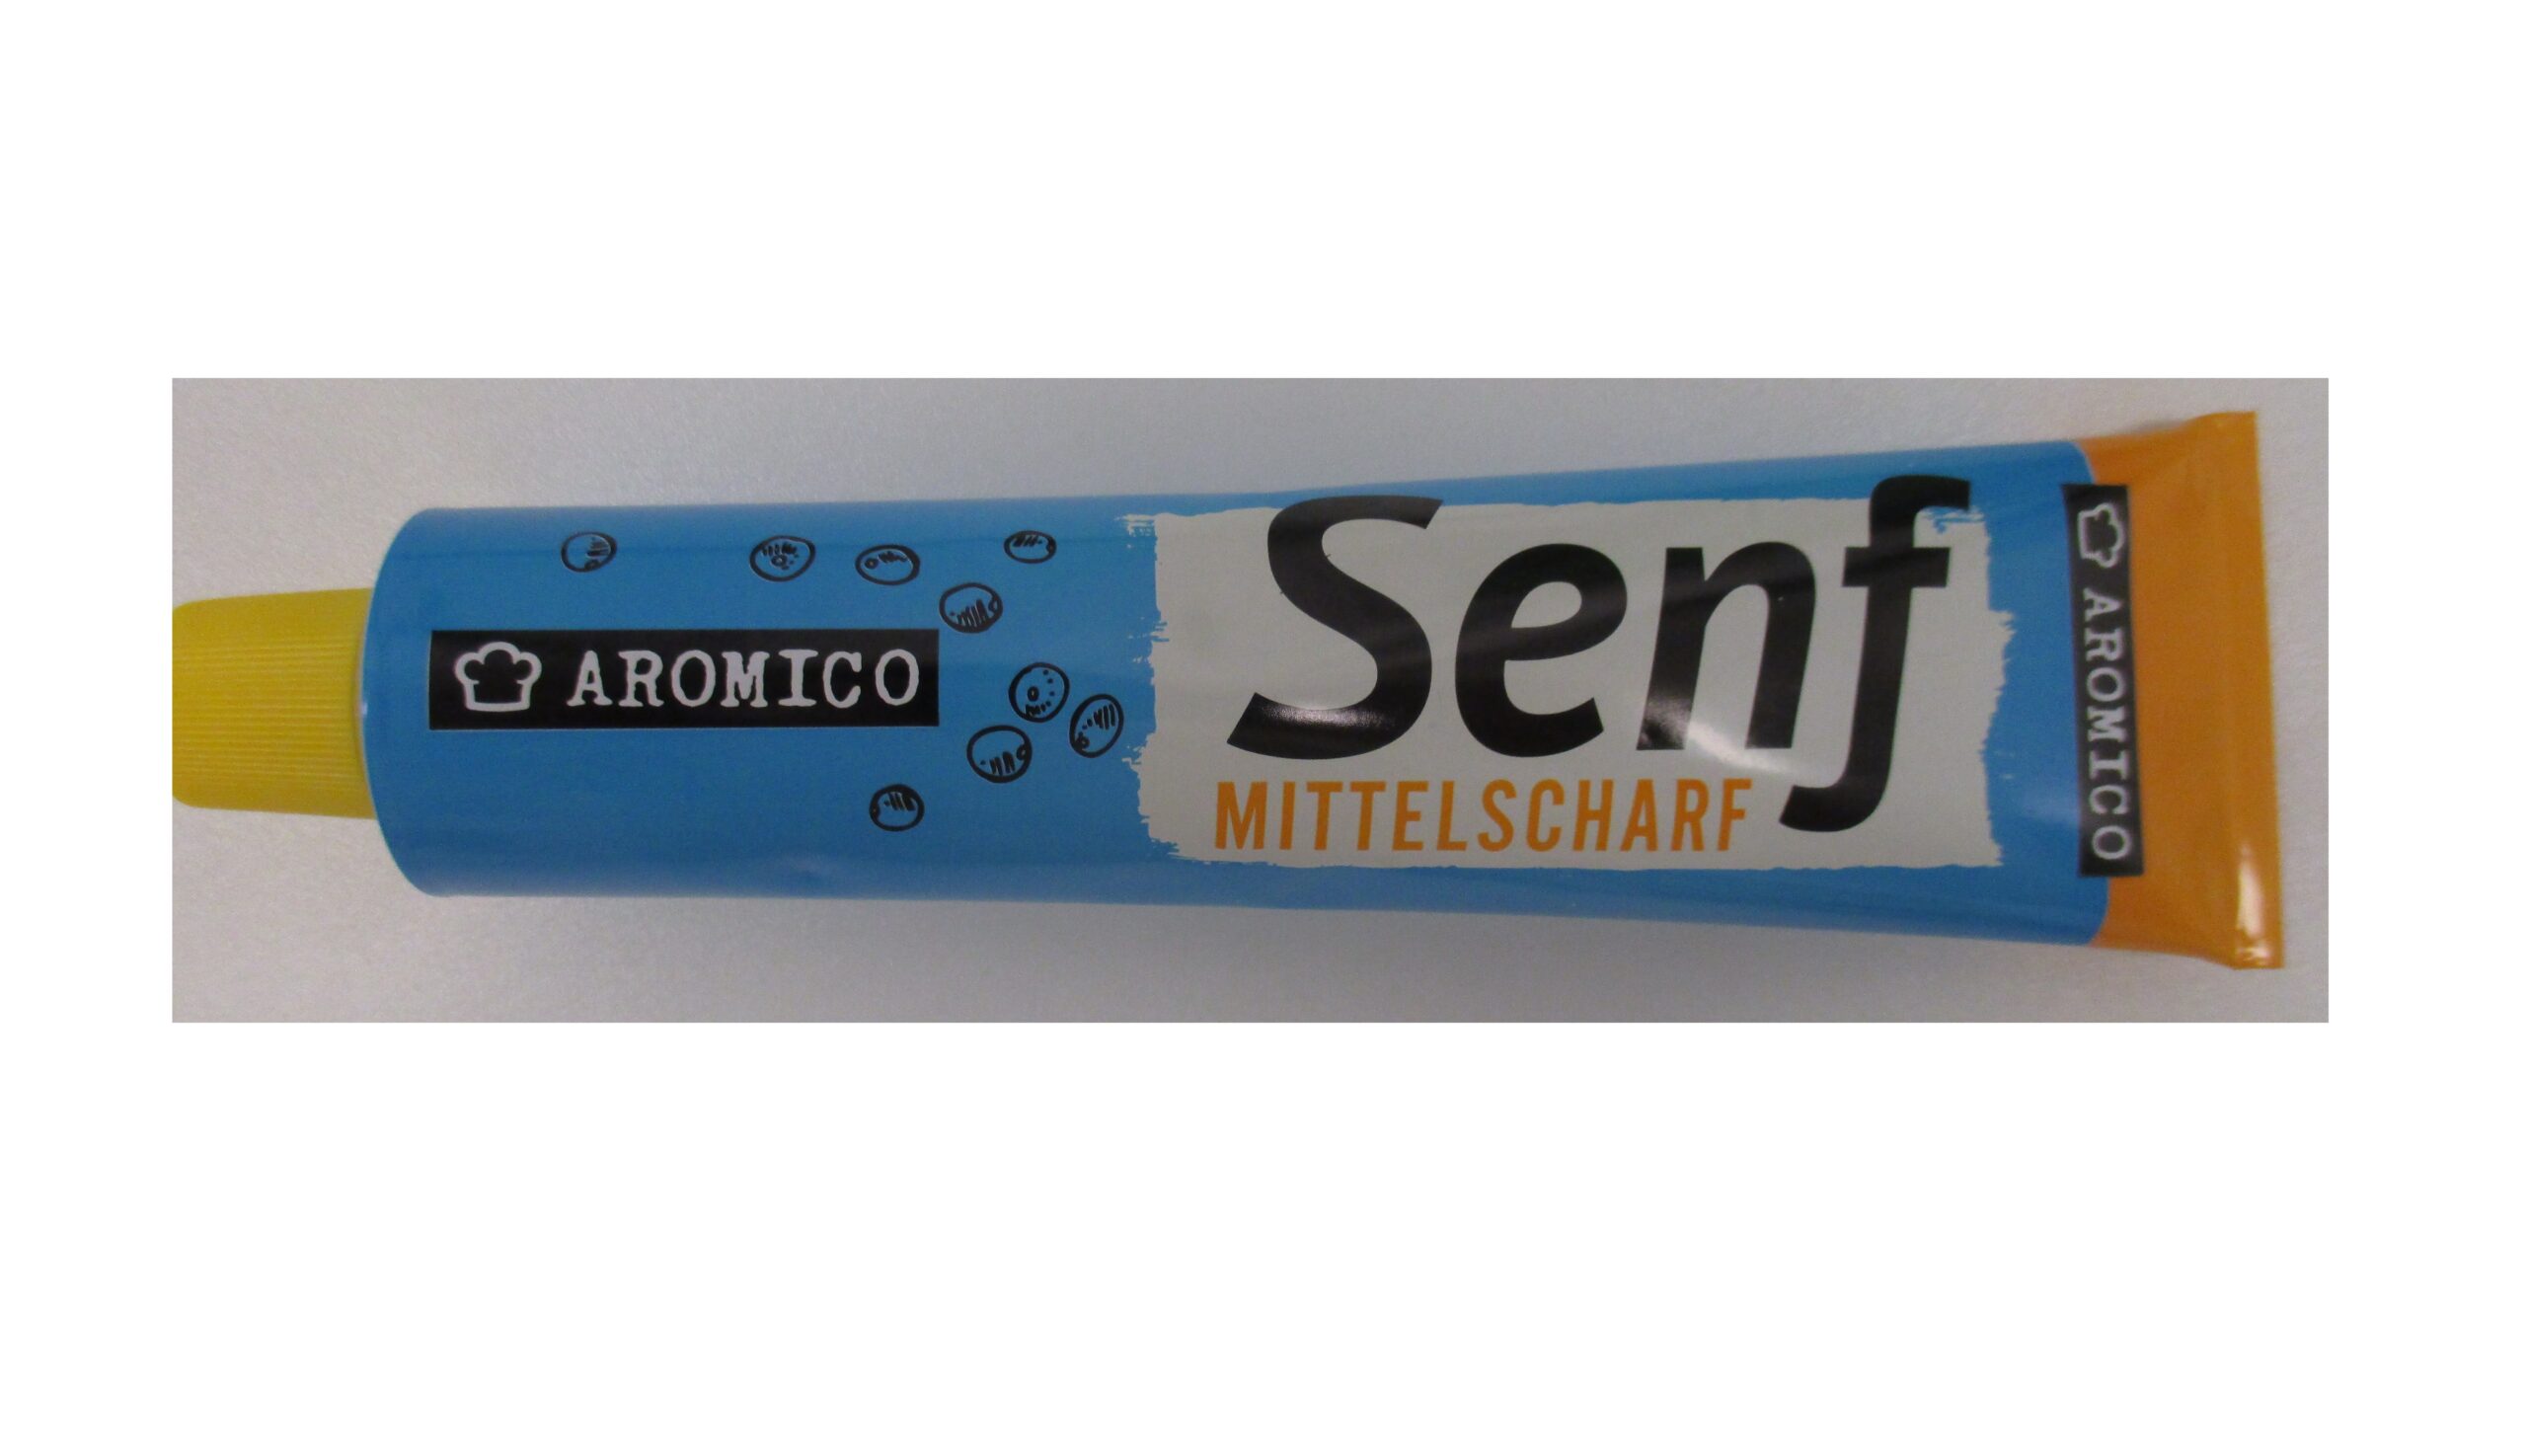 Produktabbildung "Aromico, Delikatess Senf mittelscharf"